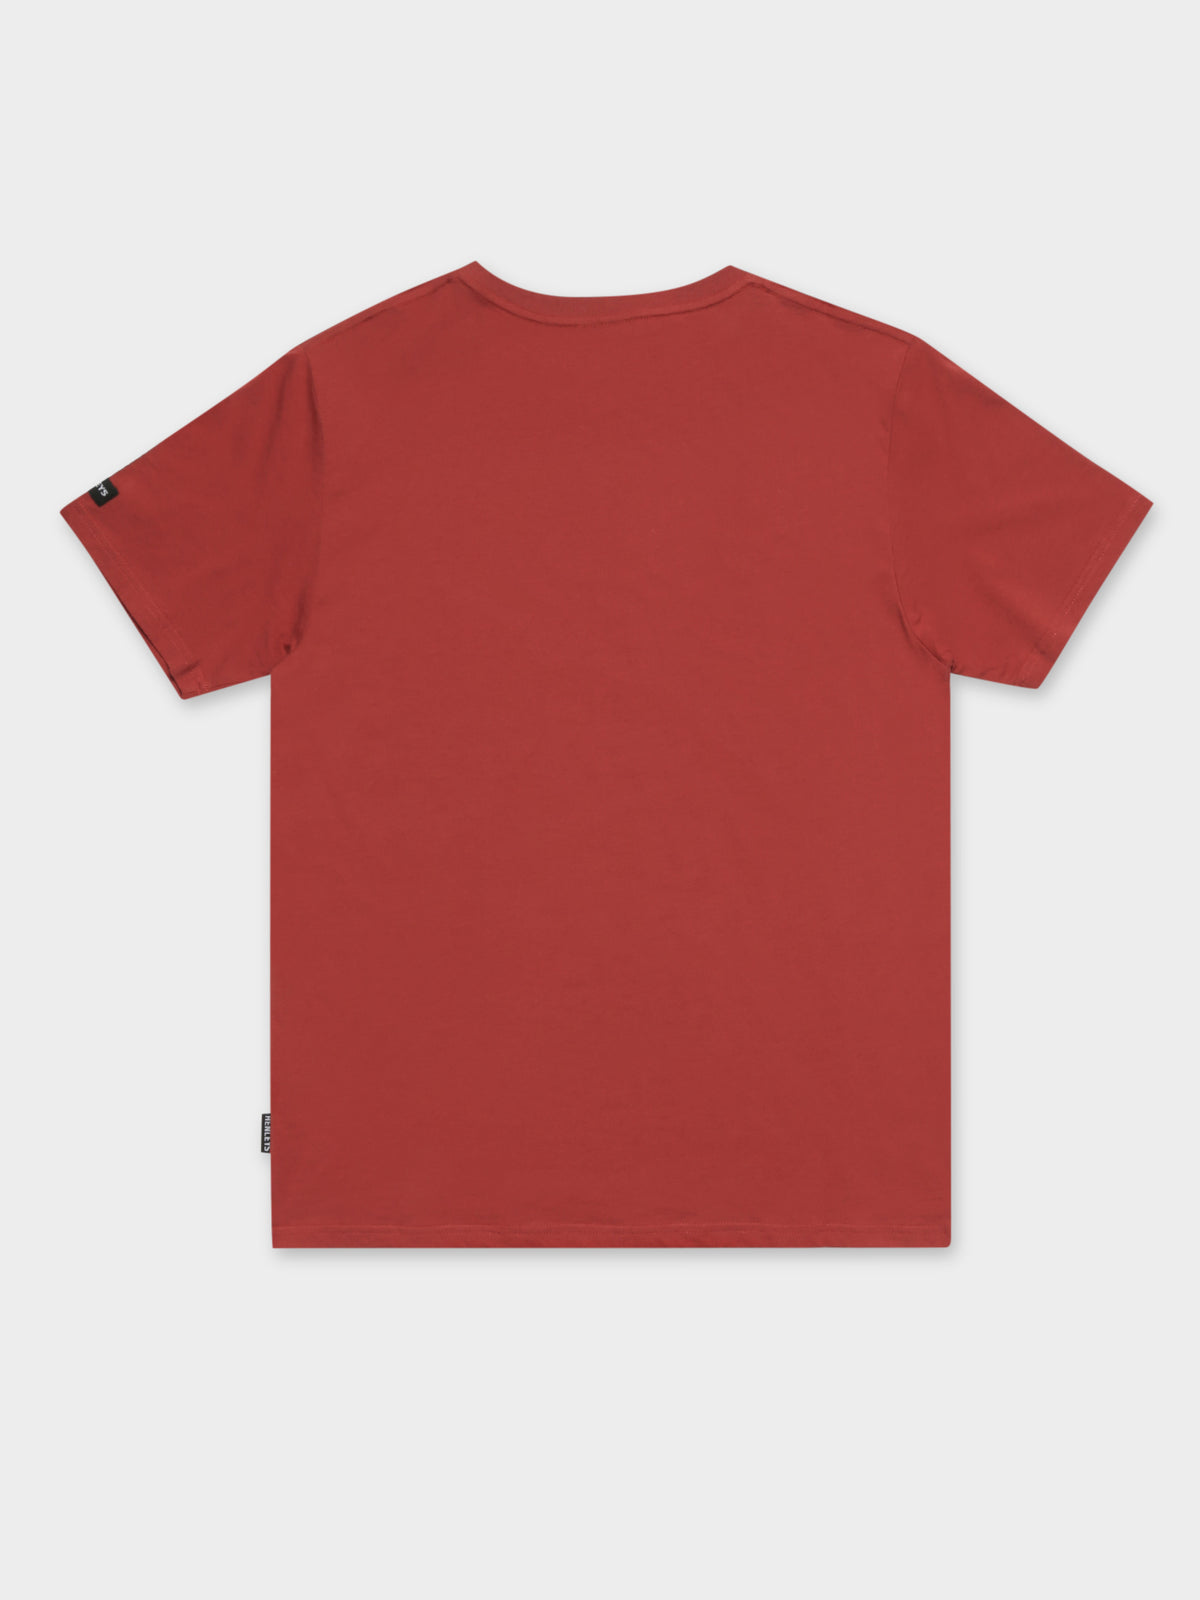 Valdez T-Shirt in Burnt Orange